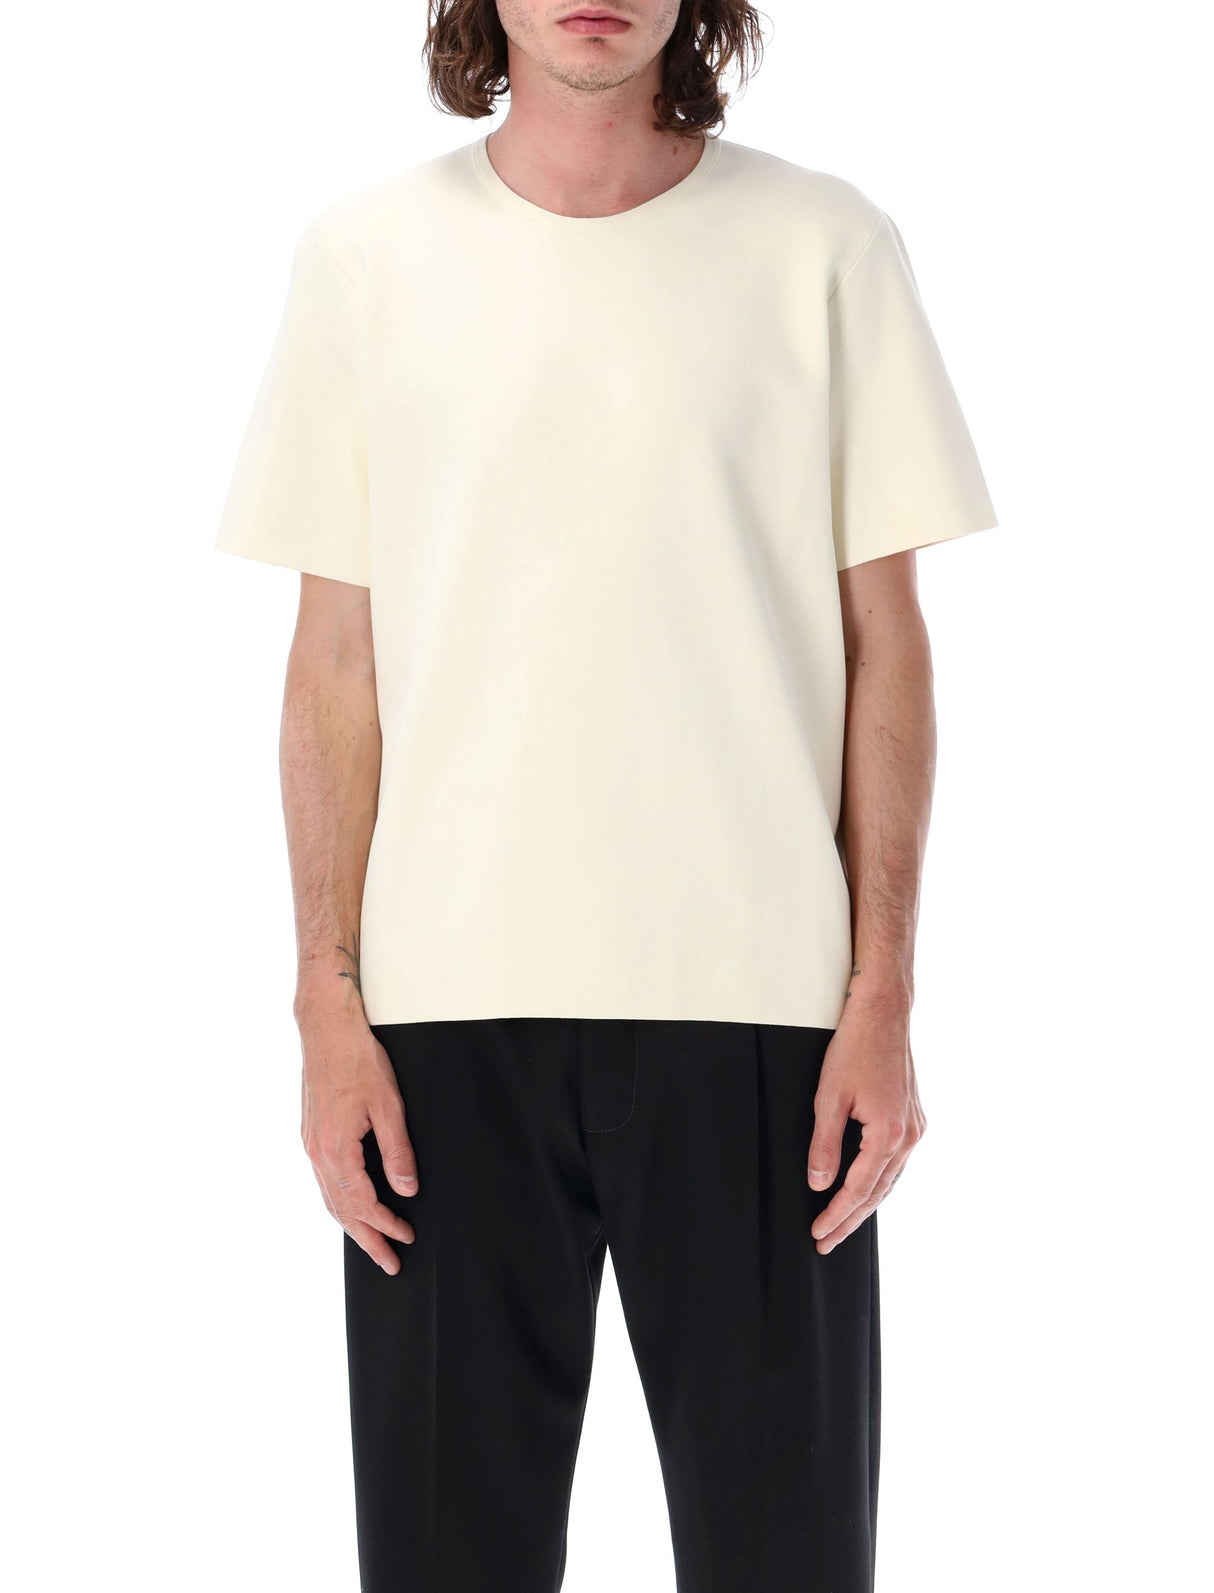 JIL SANDER Mens Superfine Viscose Interlock Knit T-Shirt in White